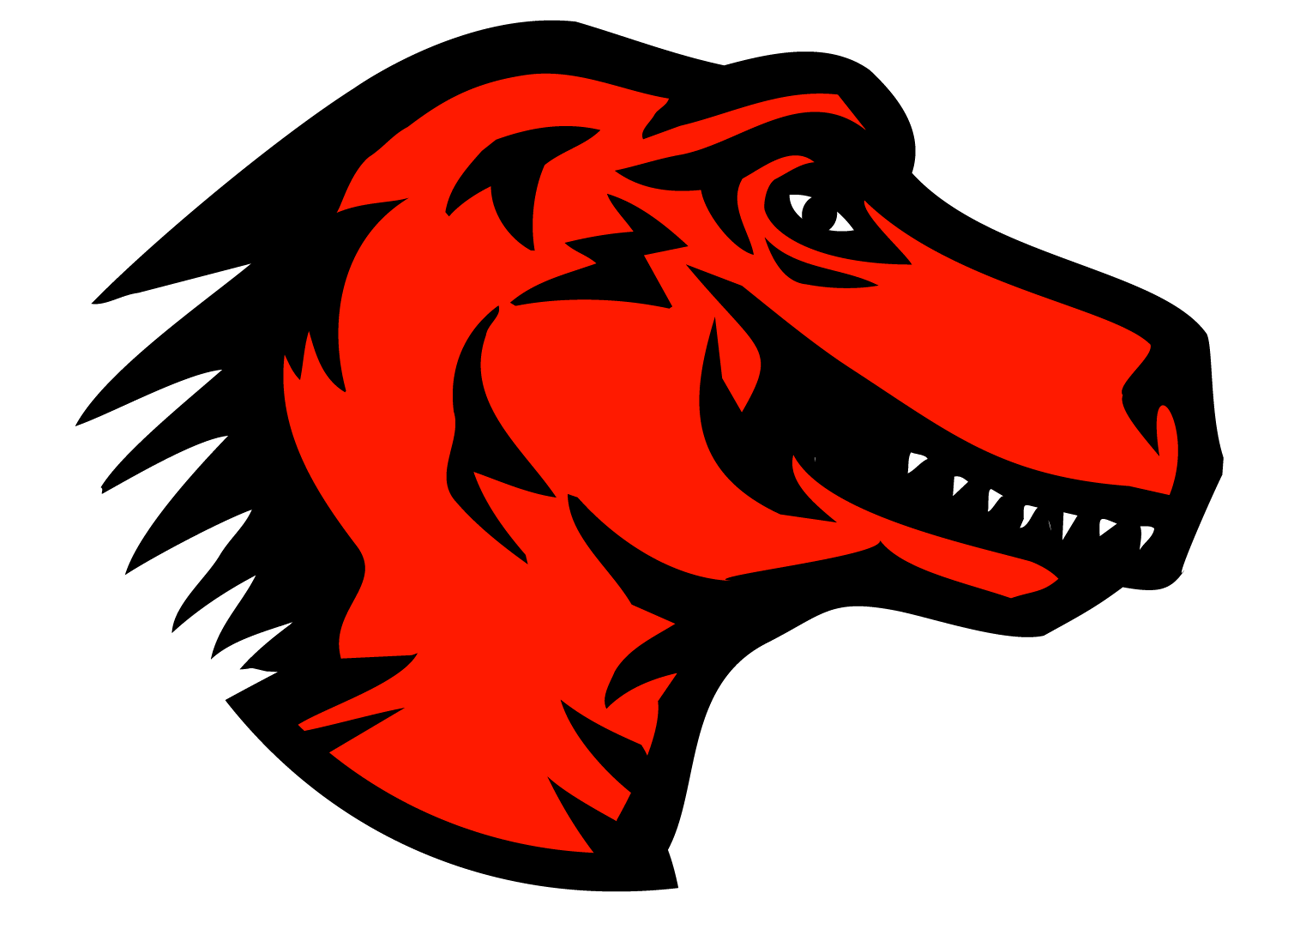 Red Dinosaur Head Logo - File:Mozilla dinosaur head logo.png - Wikimedia Commons